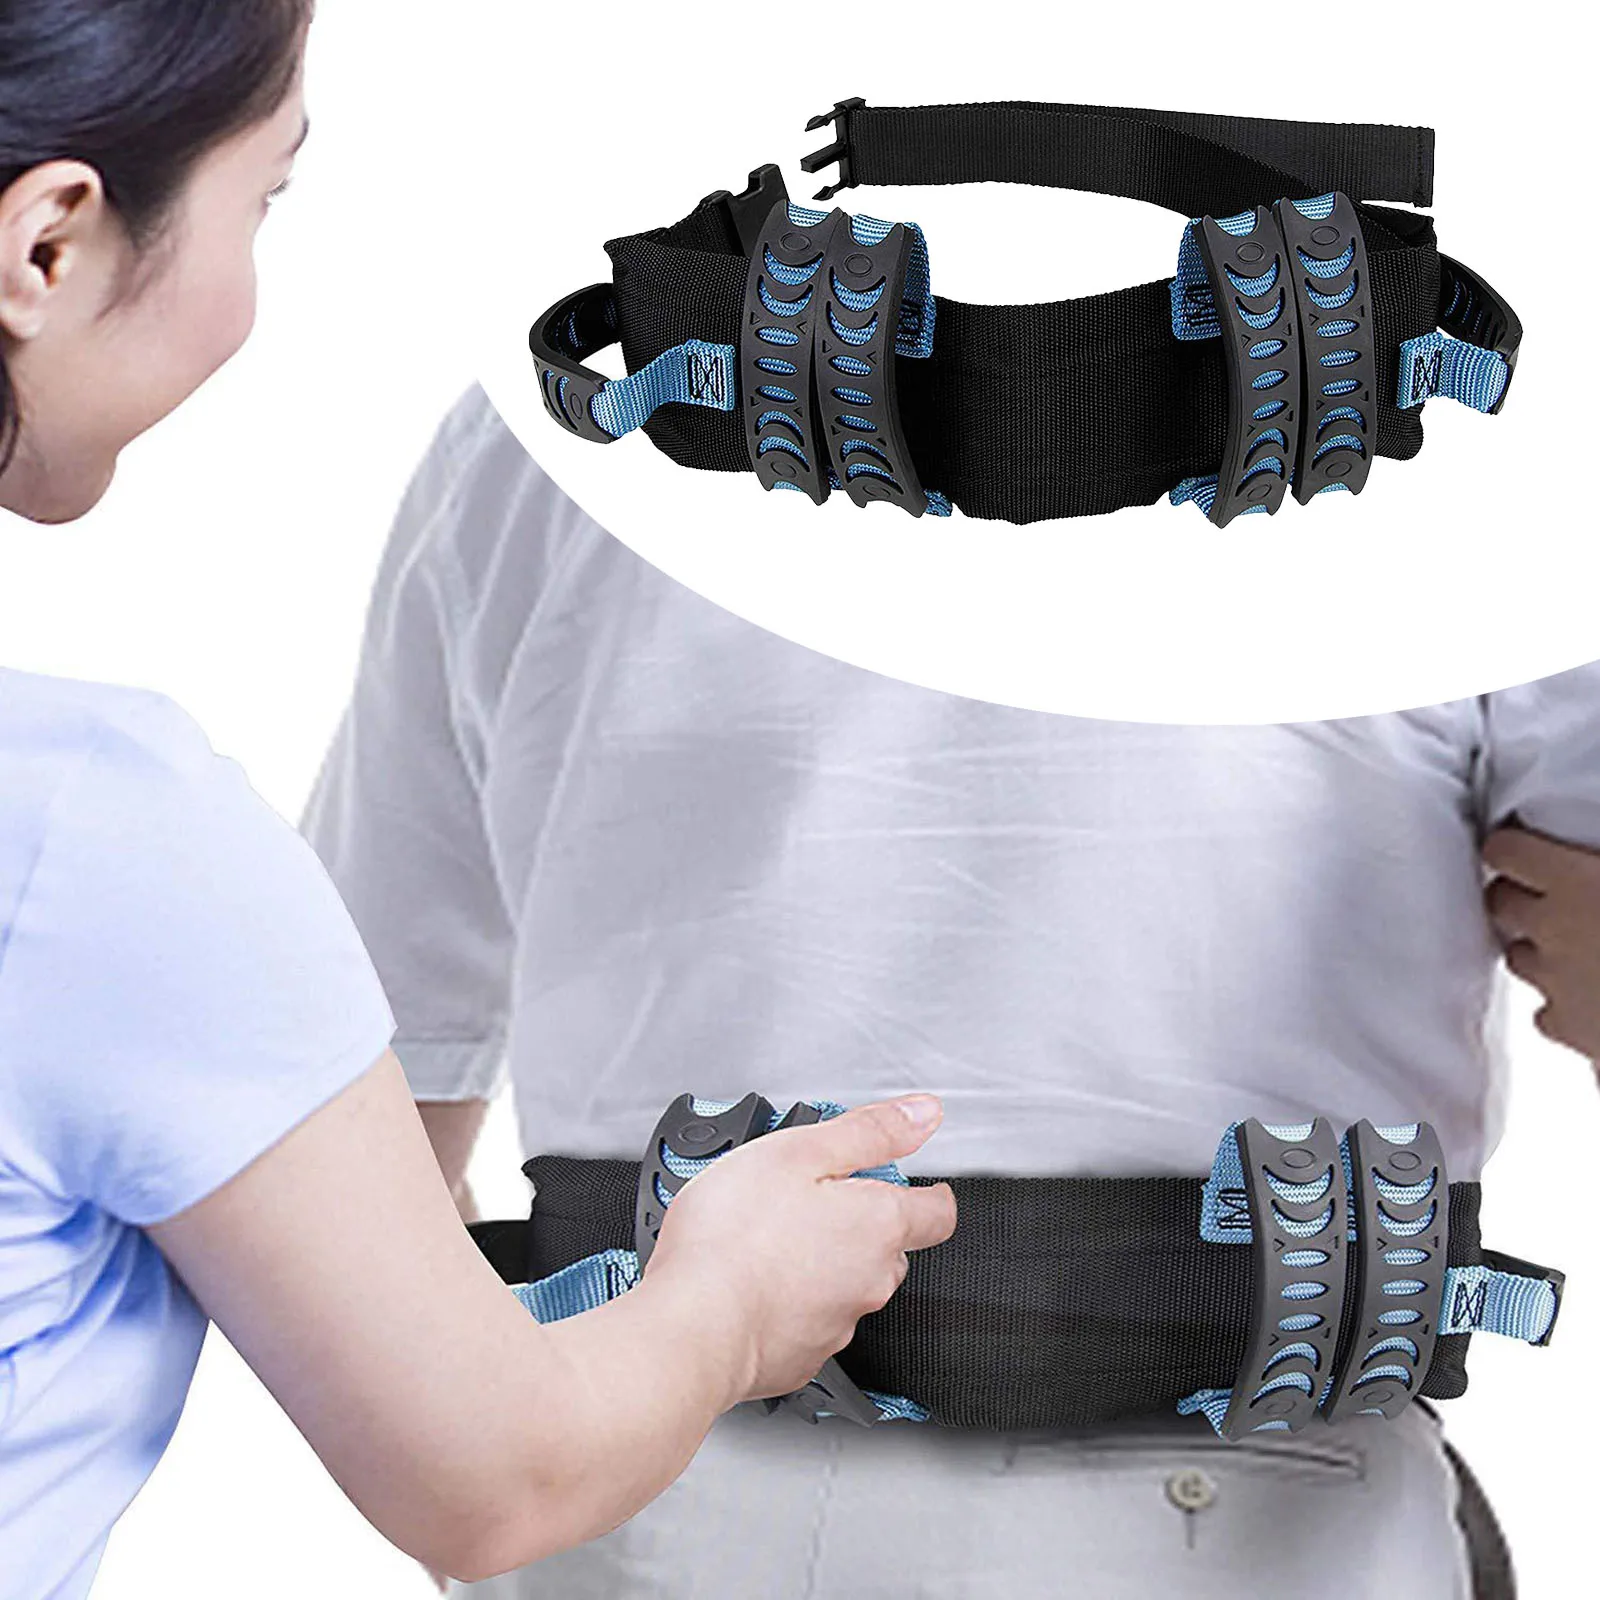 Safety Transfer Gait Belt Quick Release Buckle for Patient Care Elderly Blue Walking Nursing Assist Straps Safety Gait Handles